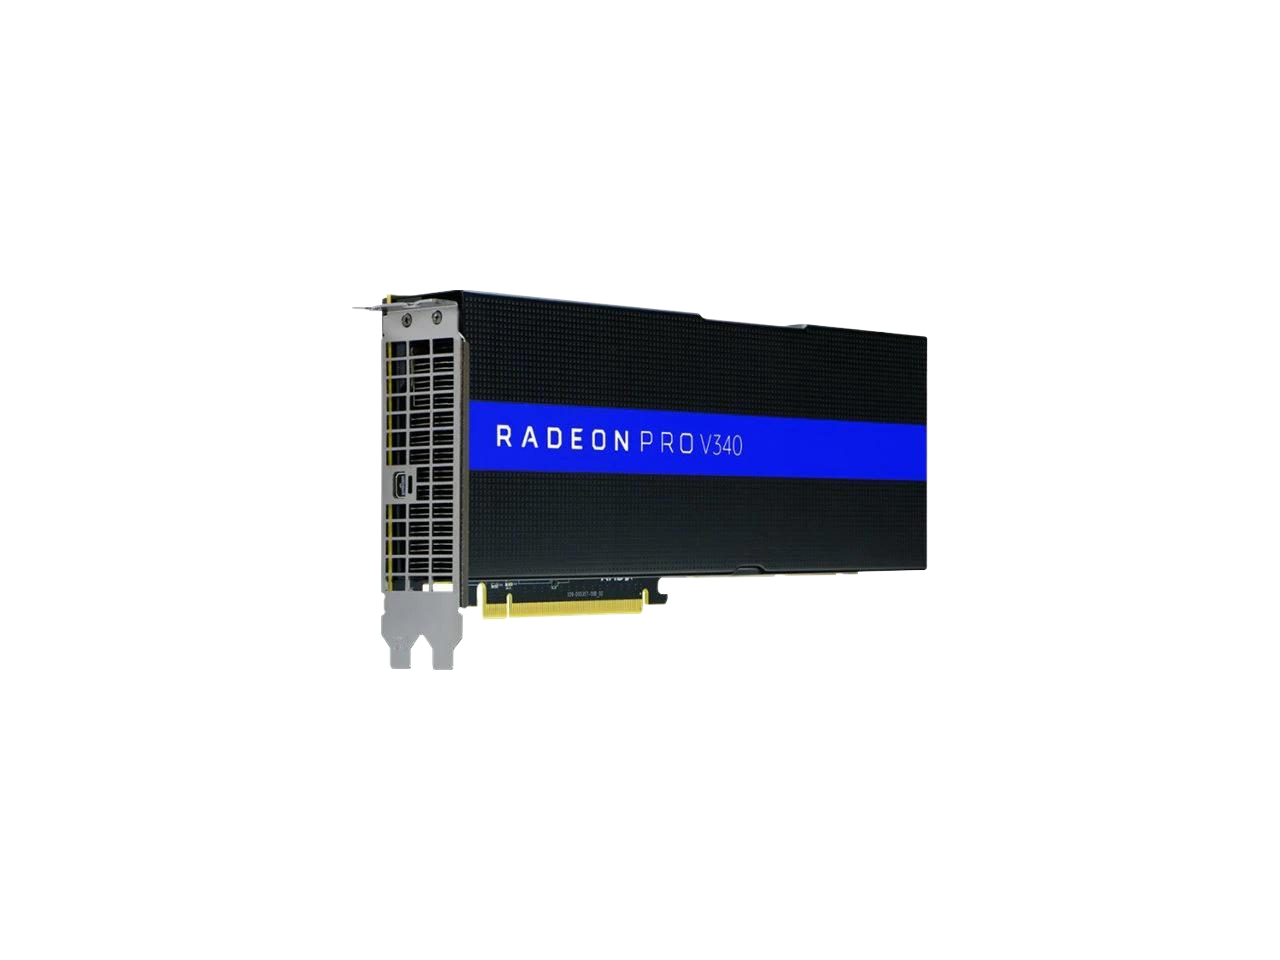 AMD Radeon Pro V340 32 GB HBM2 Video Graphics Card Computing Processor